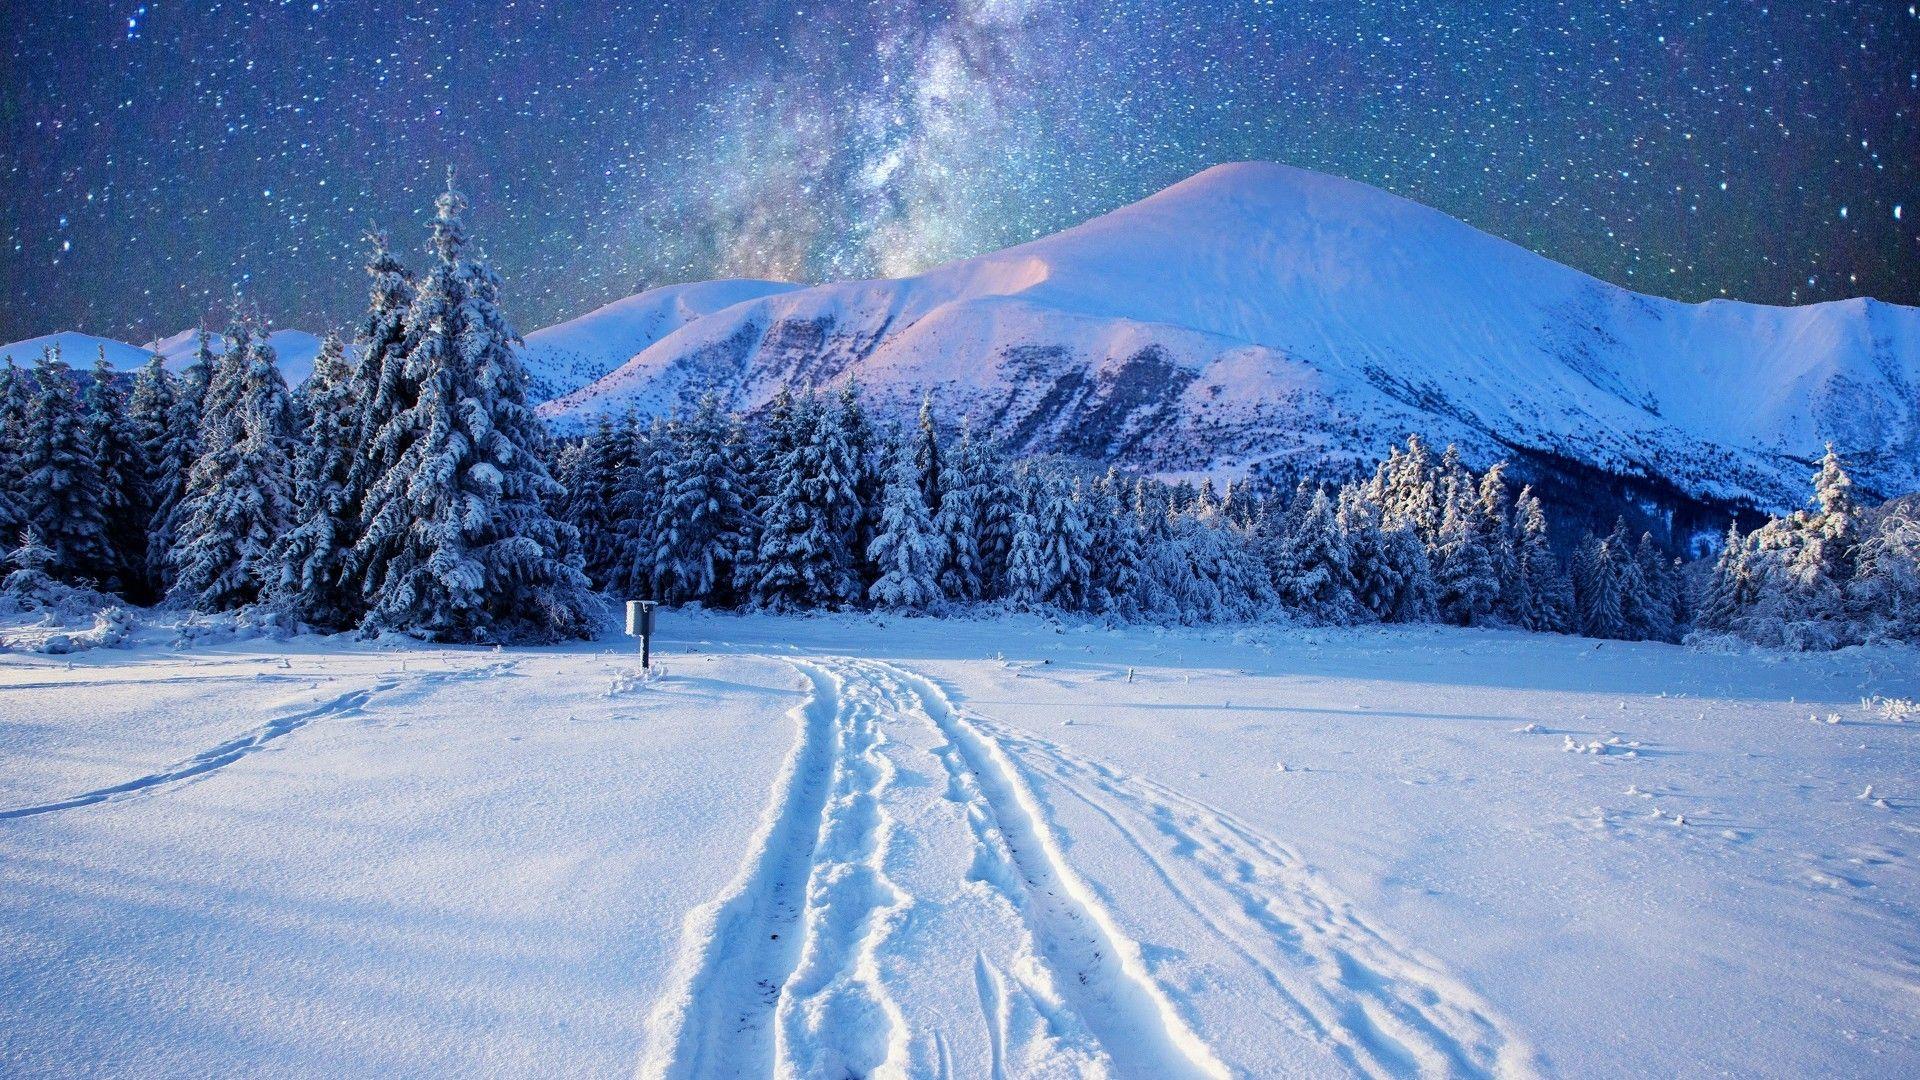 wallpaper for desktop, laptop | mt01-winter-mountain-snow-bw-nature-white